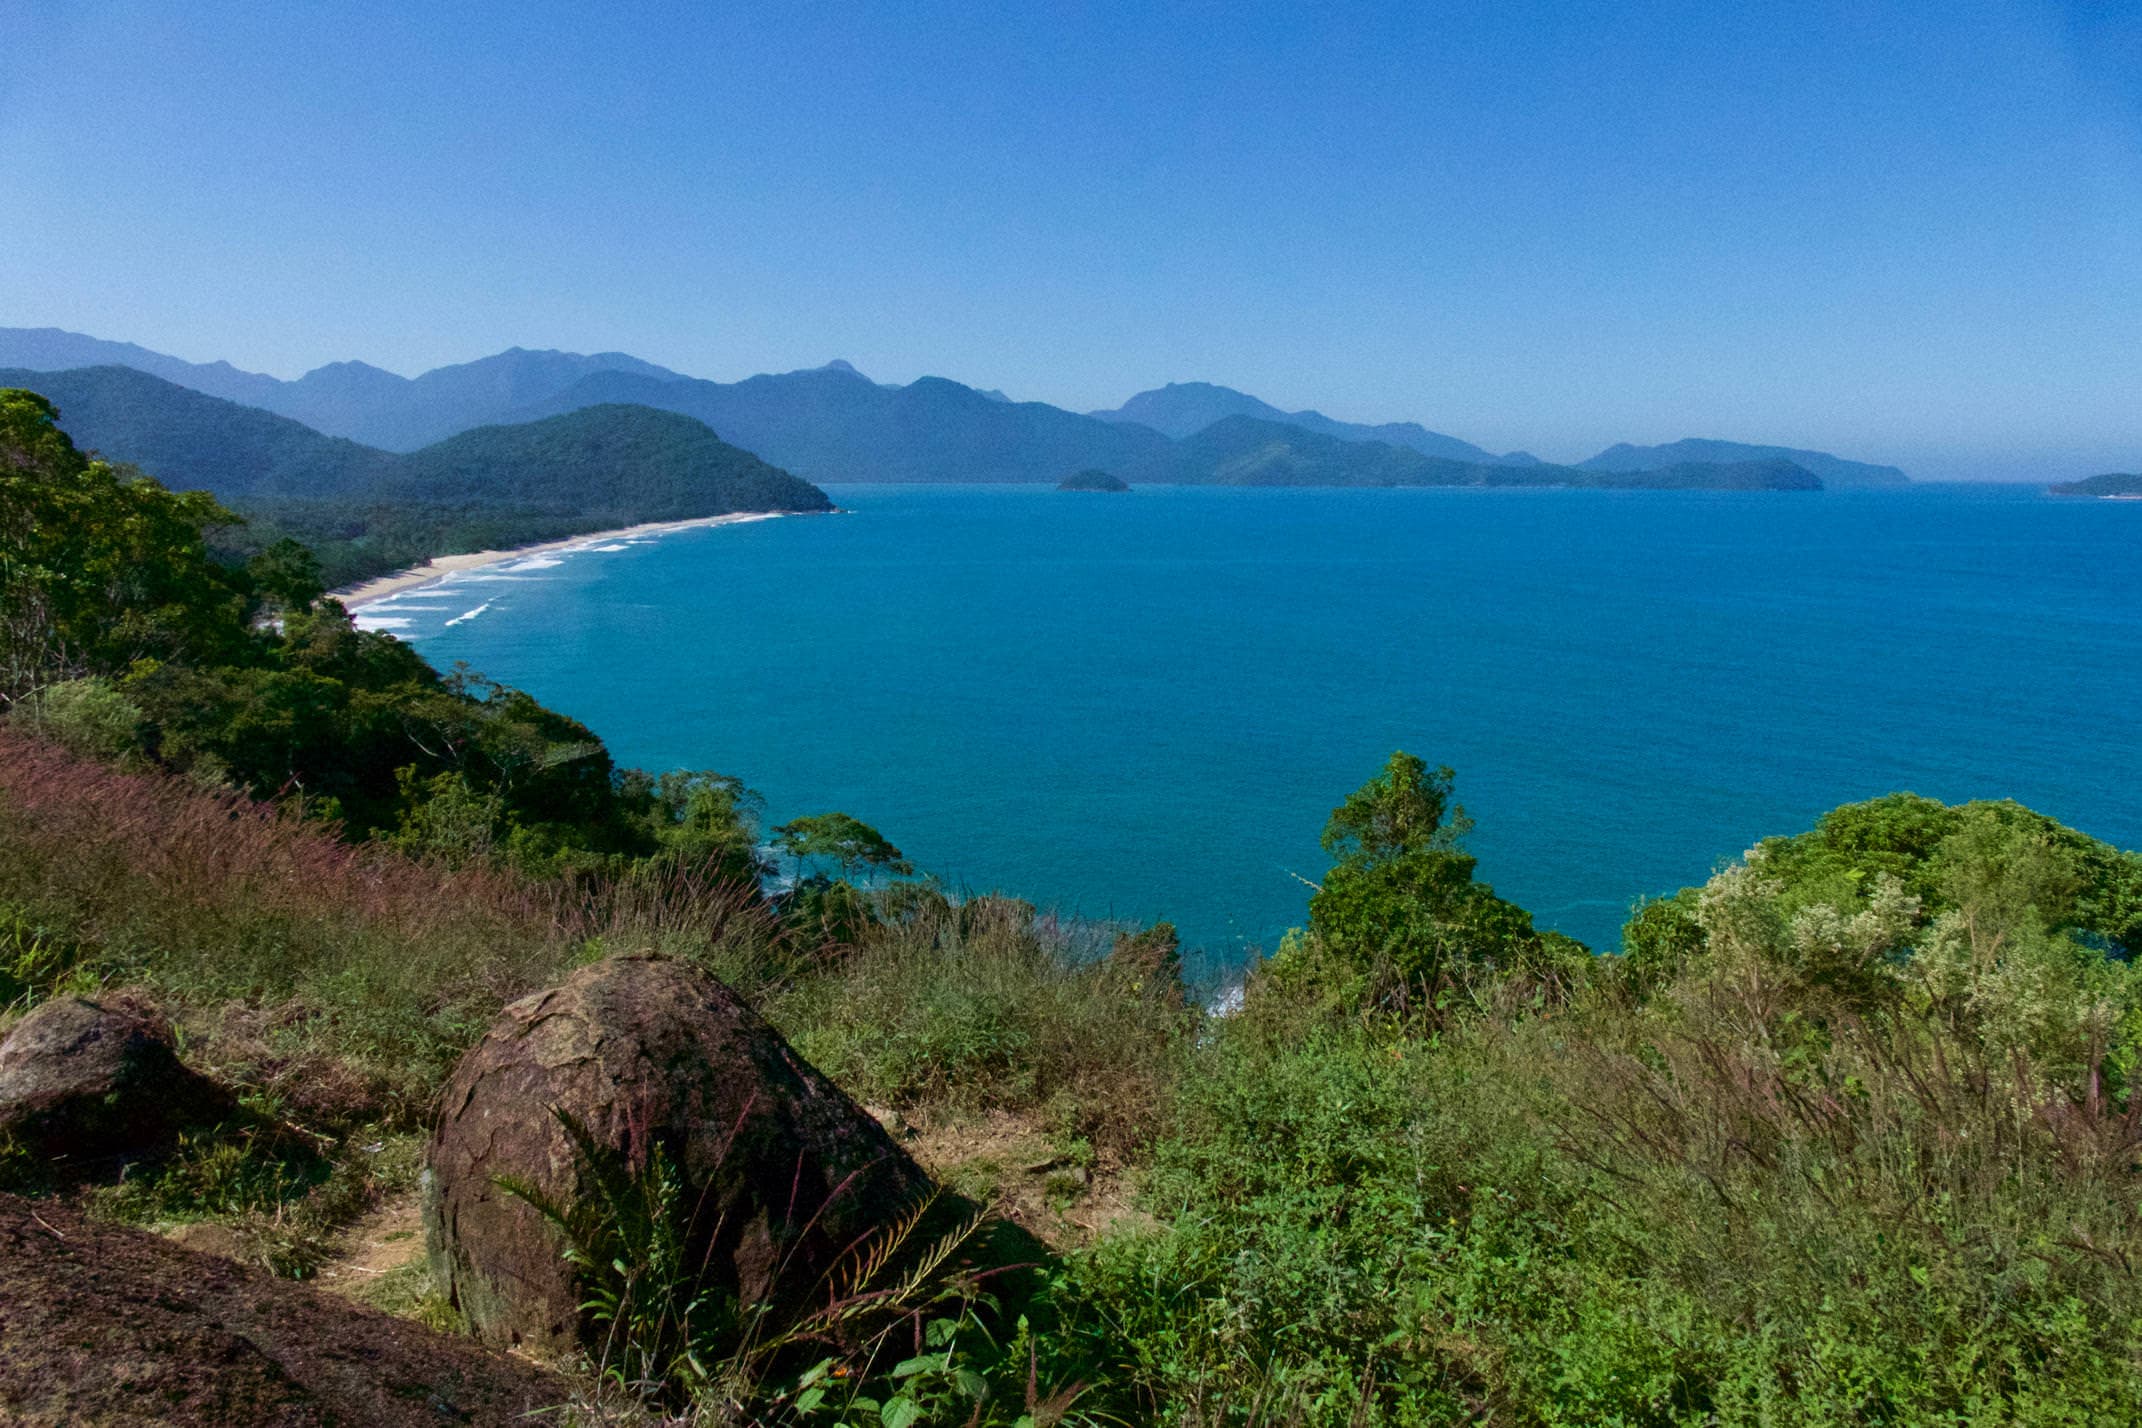 Brazil paraty views of costa verde from ubatuba copyright pura aventura thomas power